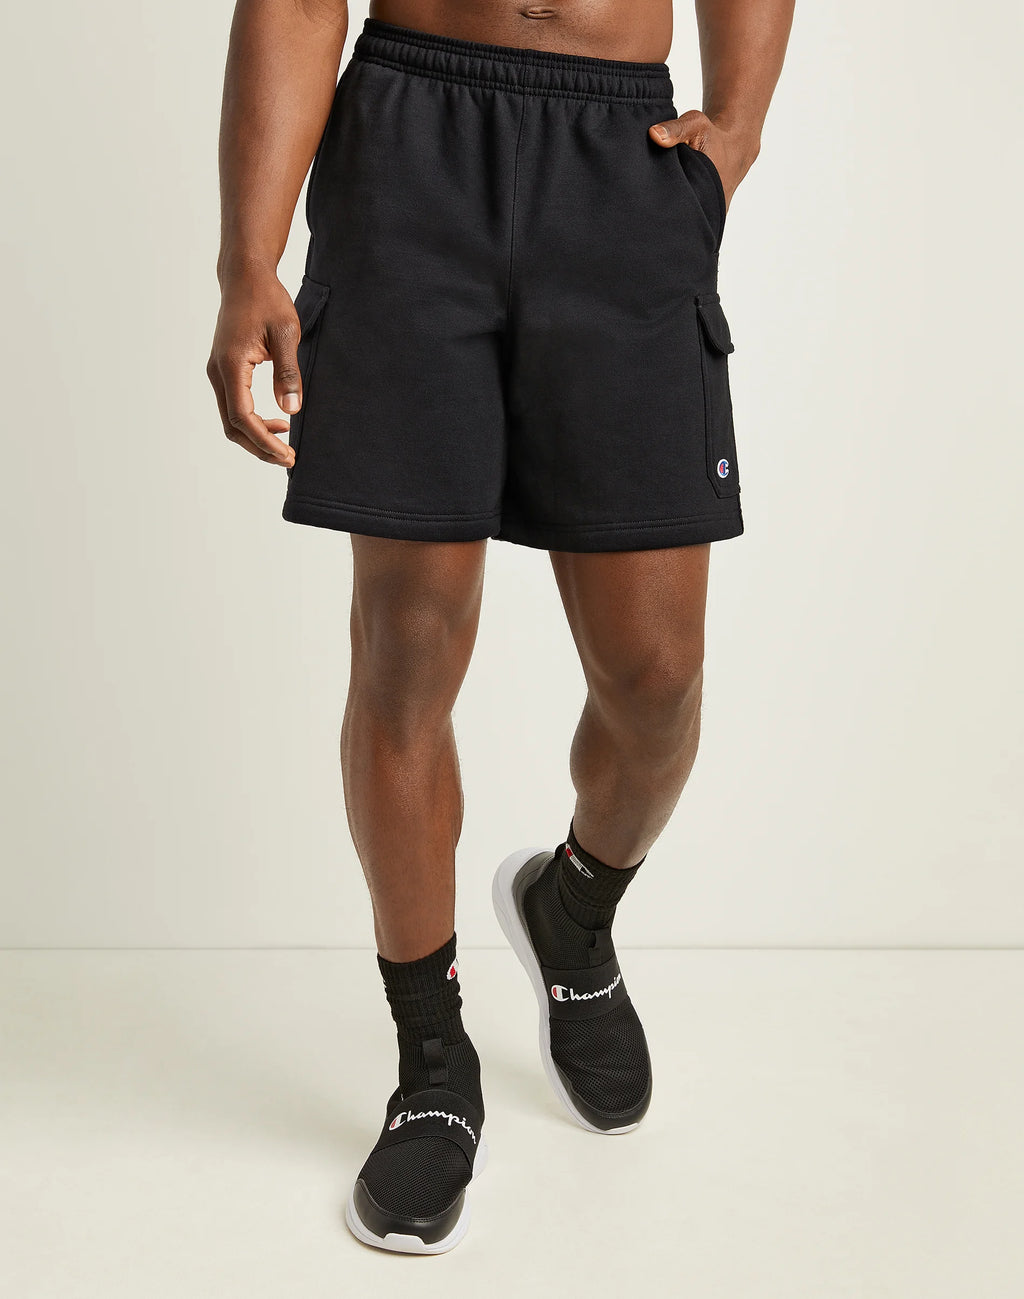 Powerblend Shorts, C Logo, 6.5